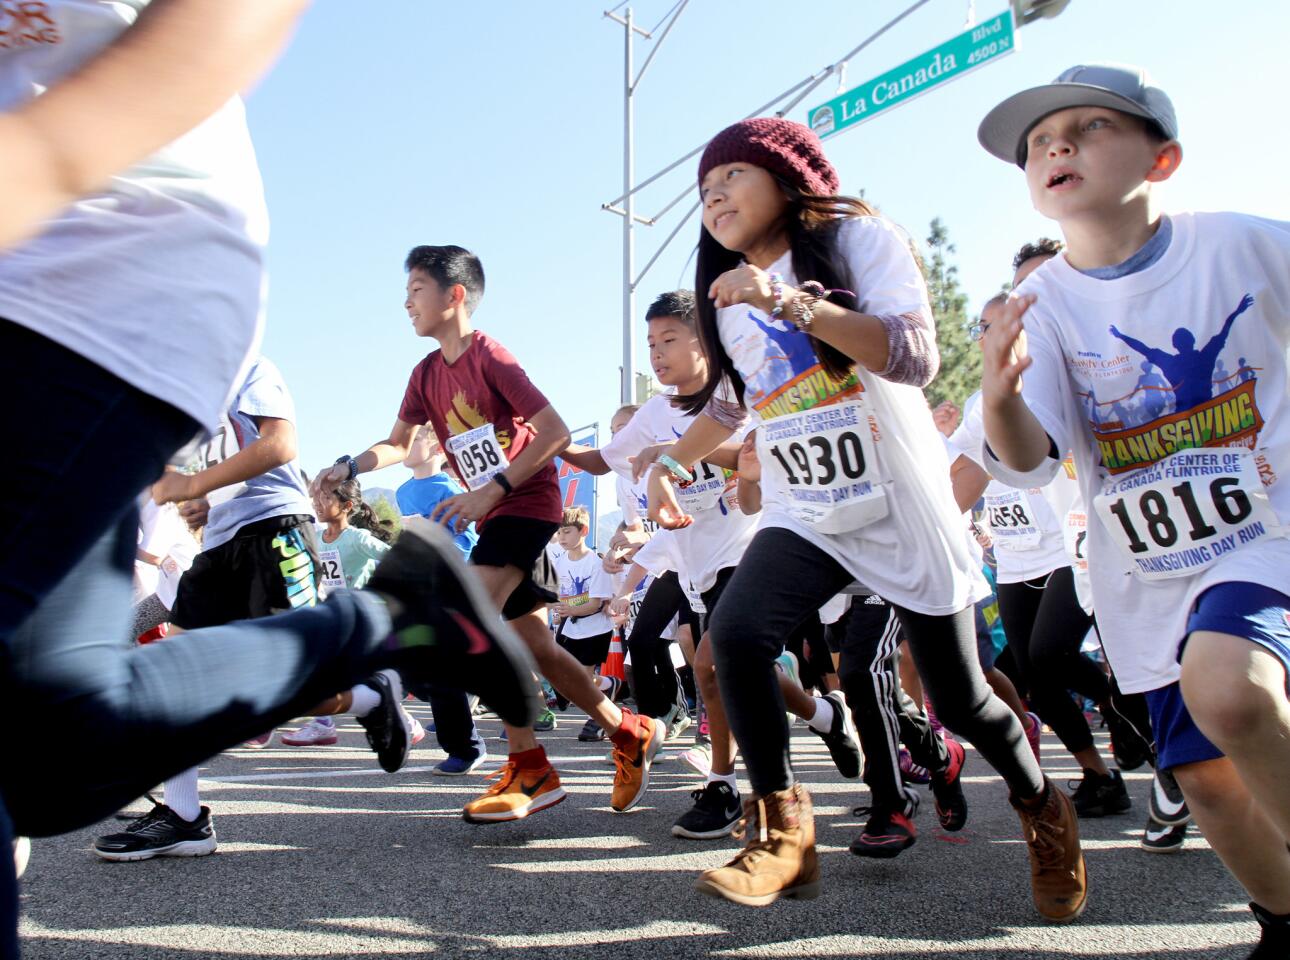 Photo Gallery: The annual Community Center of La Cañada Flintridge Thanksgiving Day Run